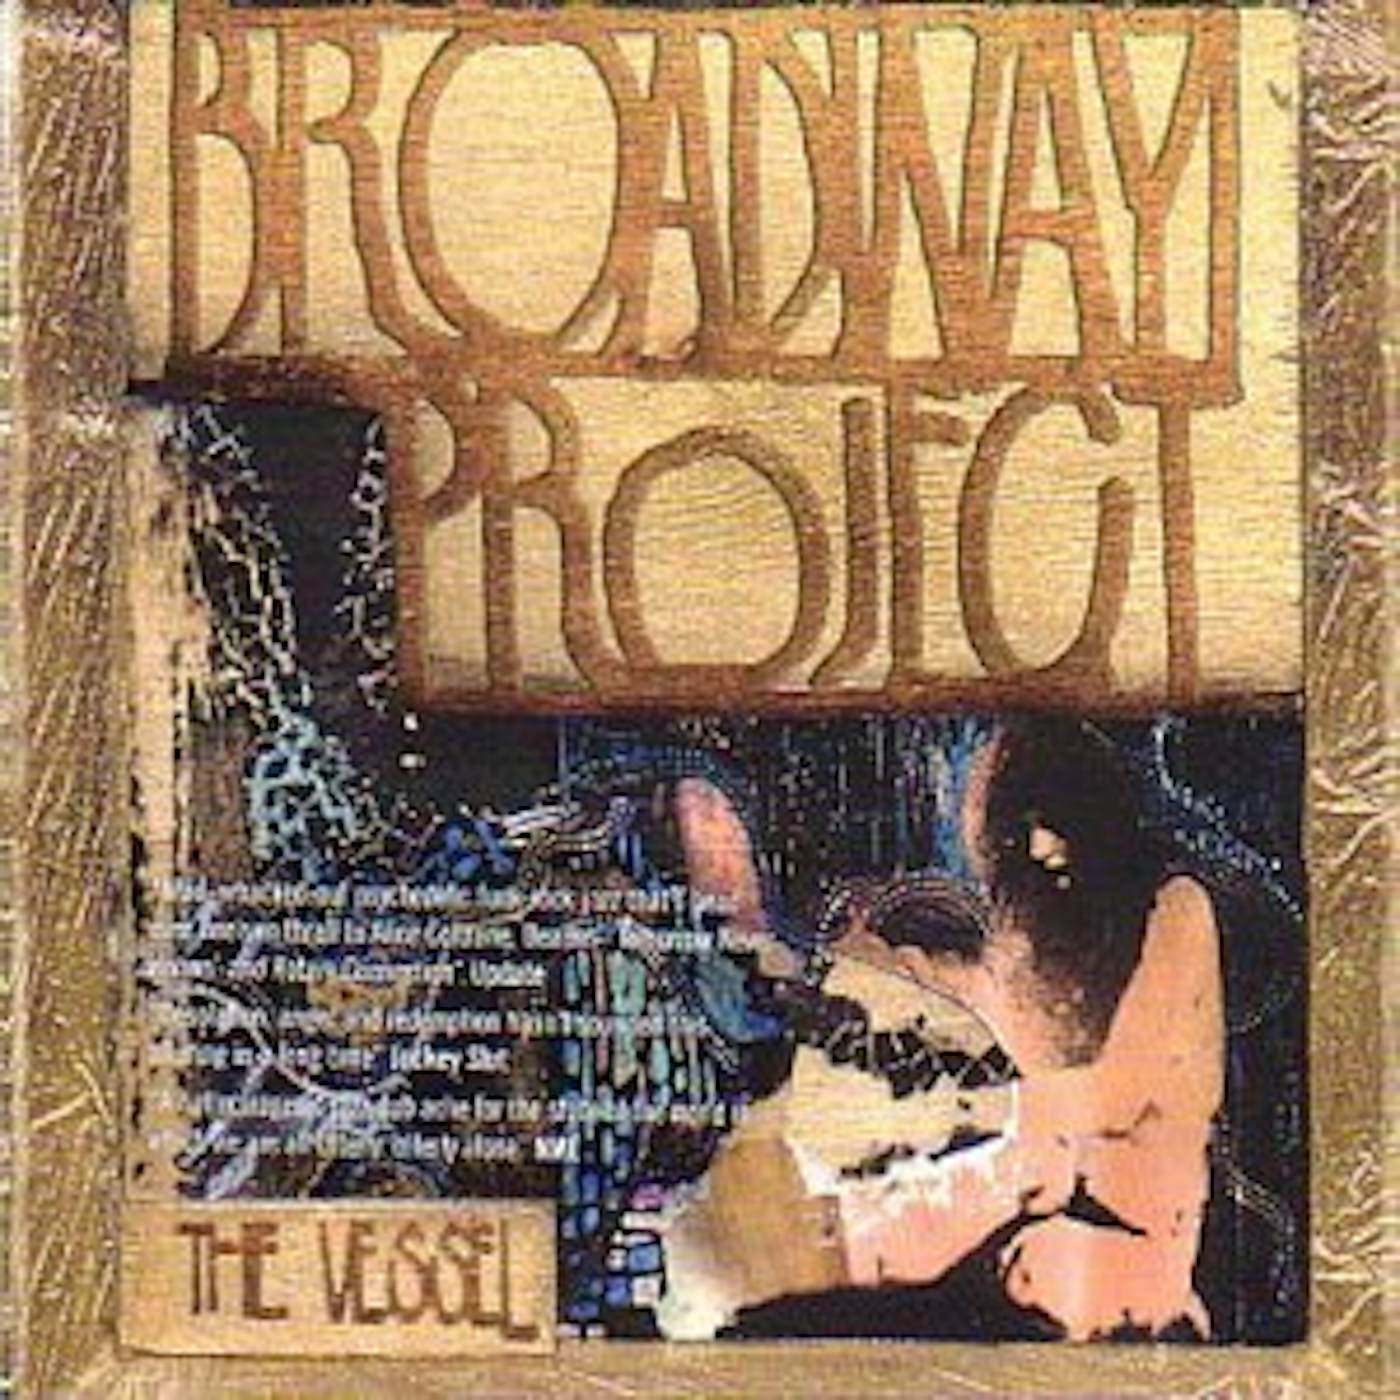 Broadway Project VESSEL Vinyl Record